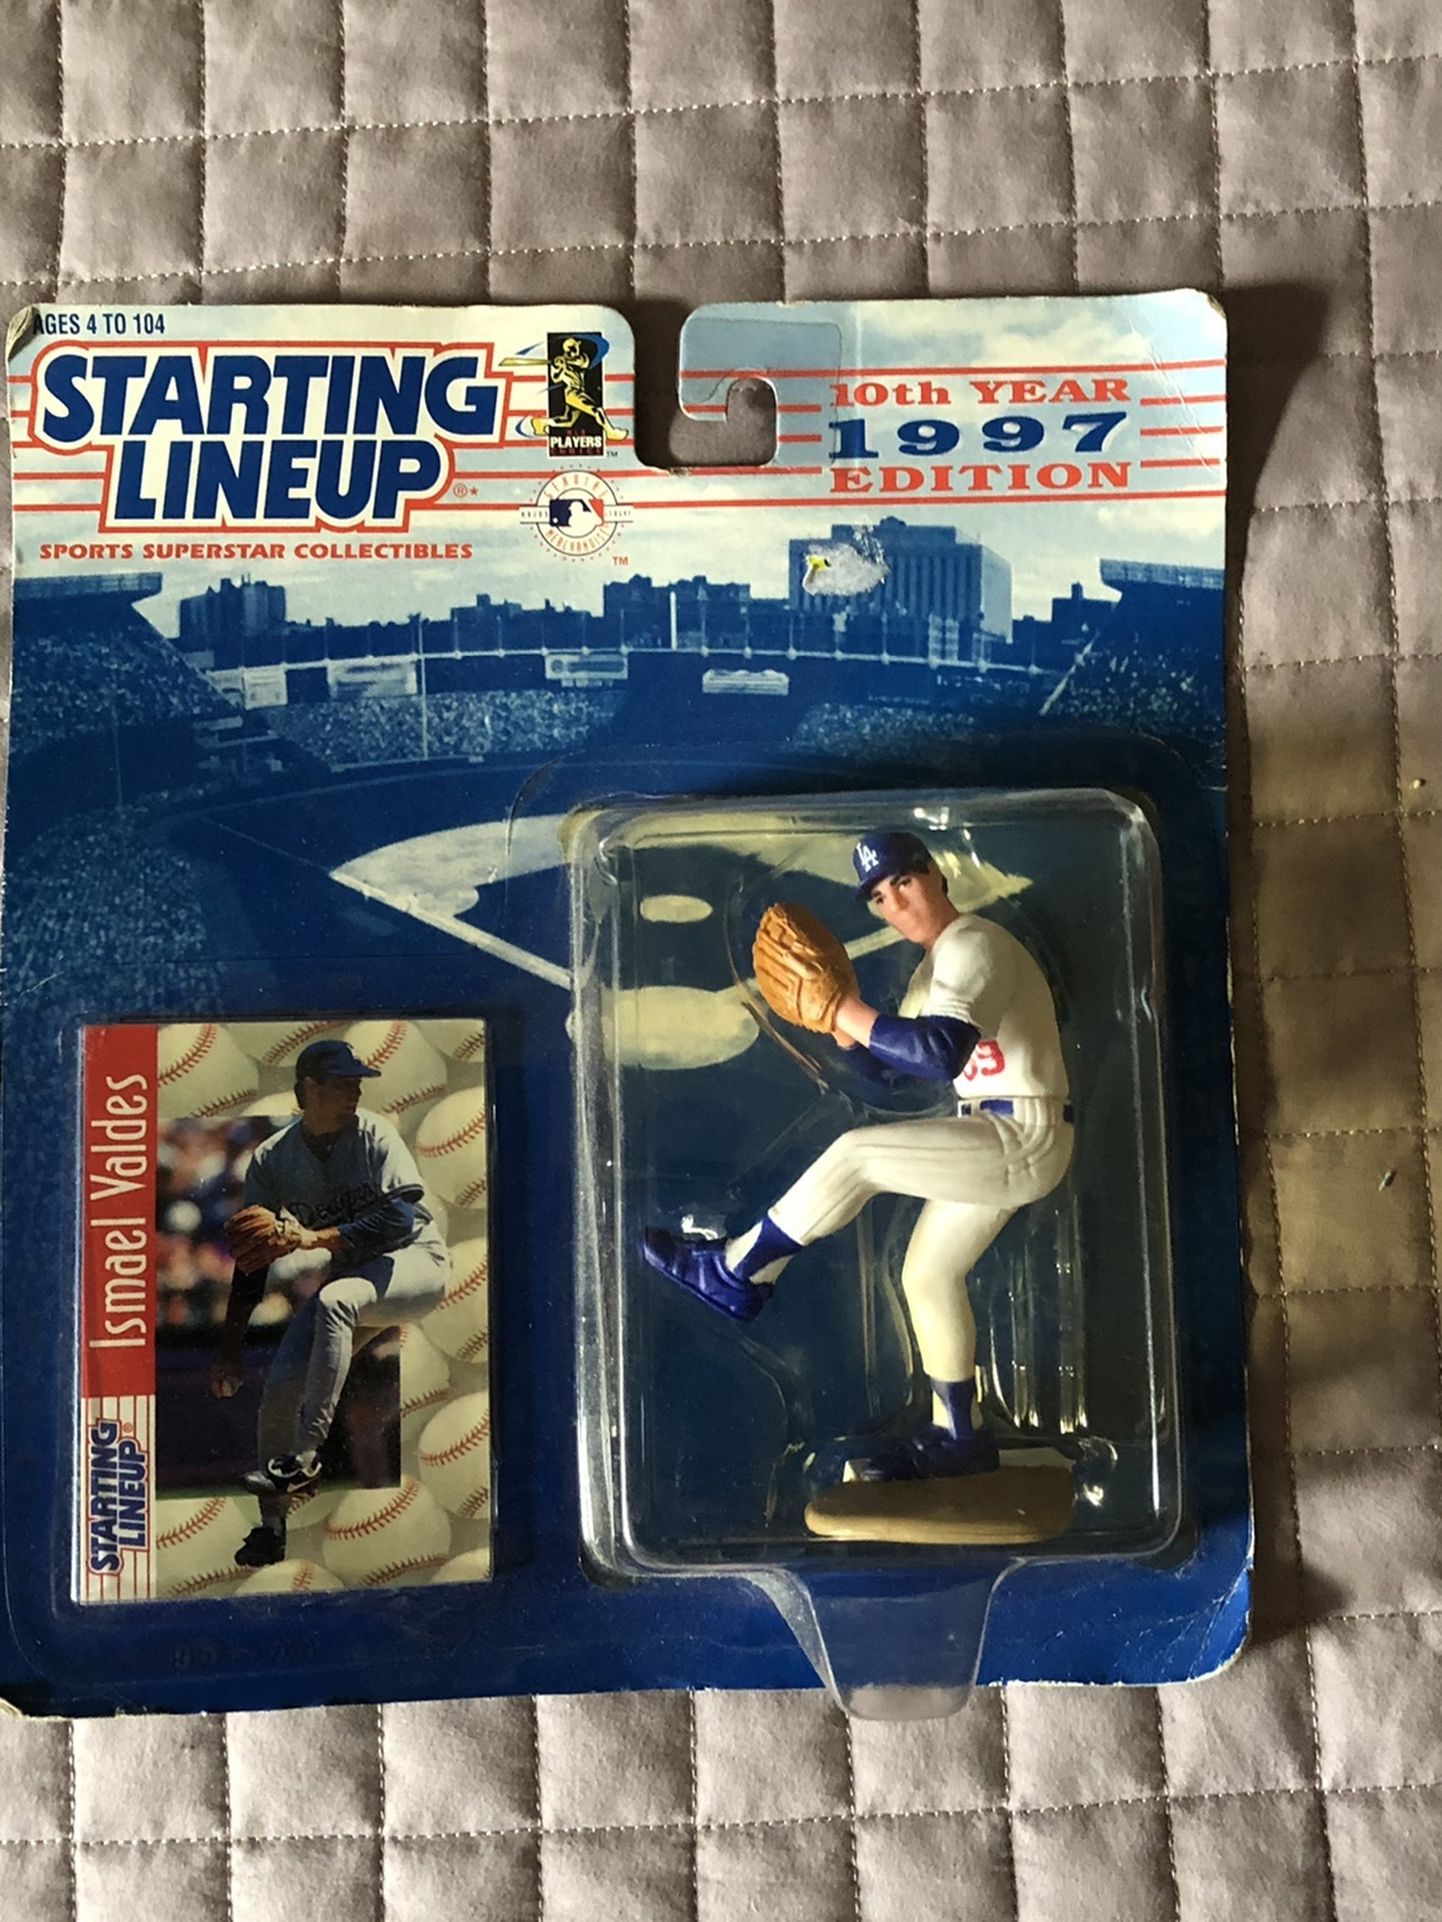 1997 Los Angeles Dodgers Ismael Valdes Kenner Brand New Toy